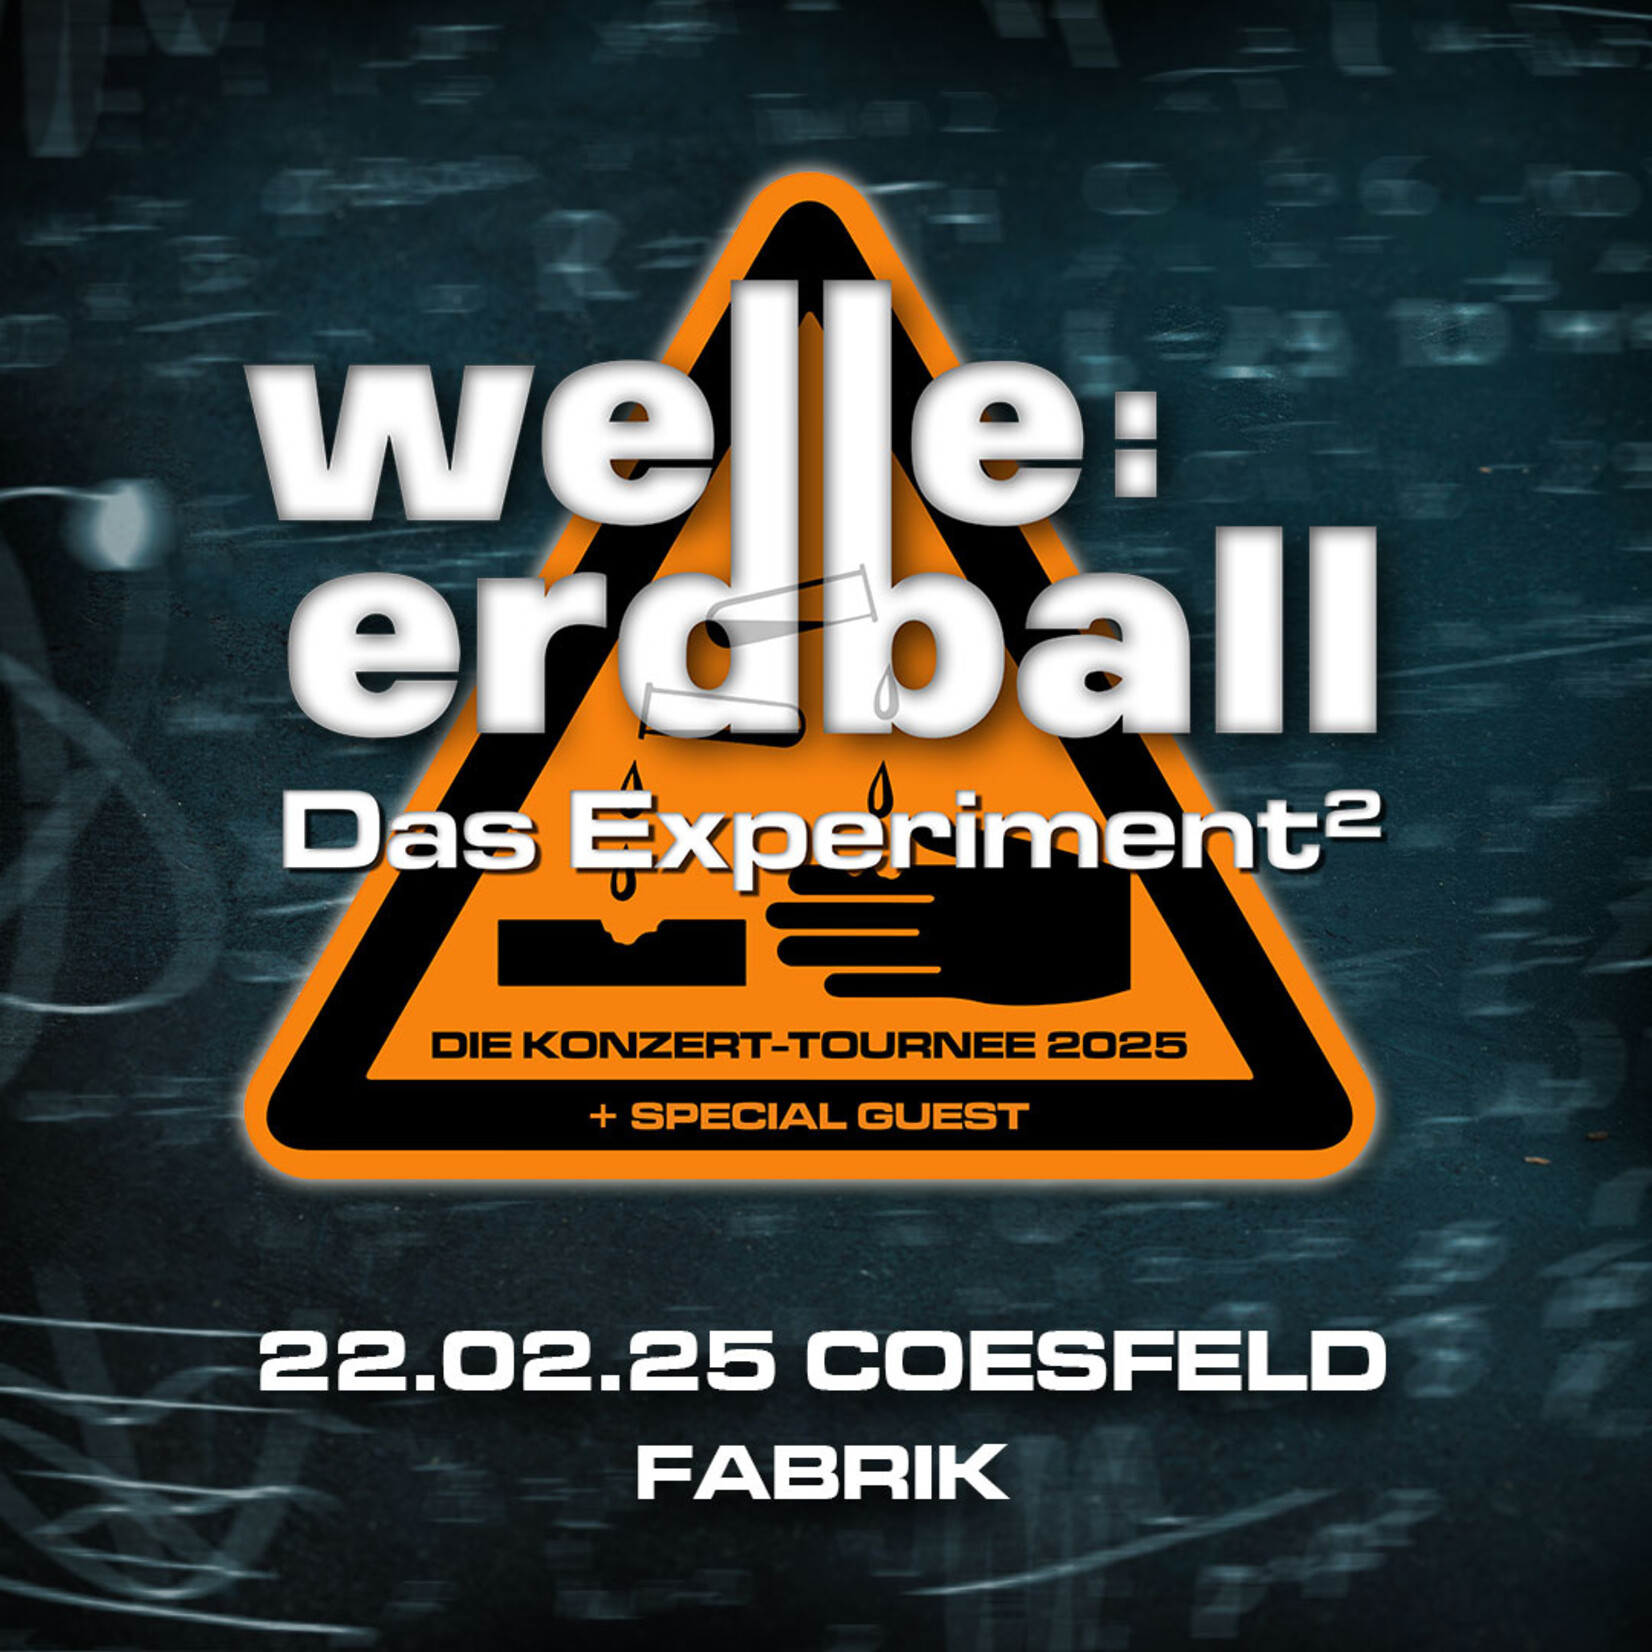 22.02.2025 - COESFELD - WELLE:ERDBALL - DAS EXPERIMENT²